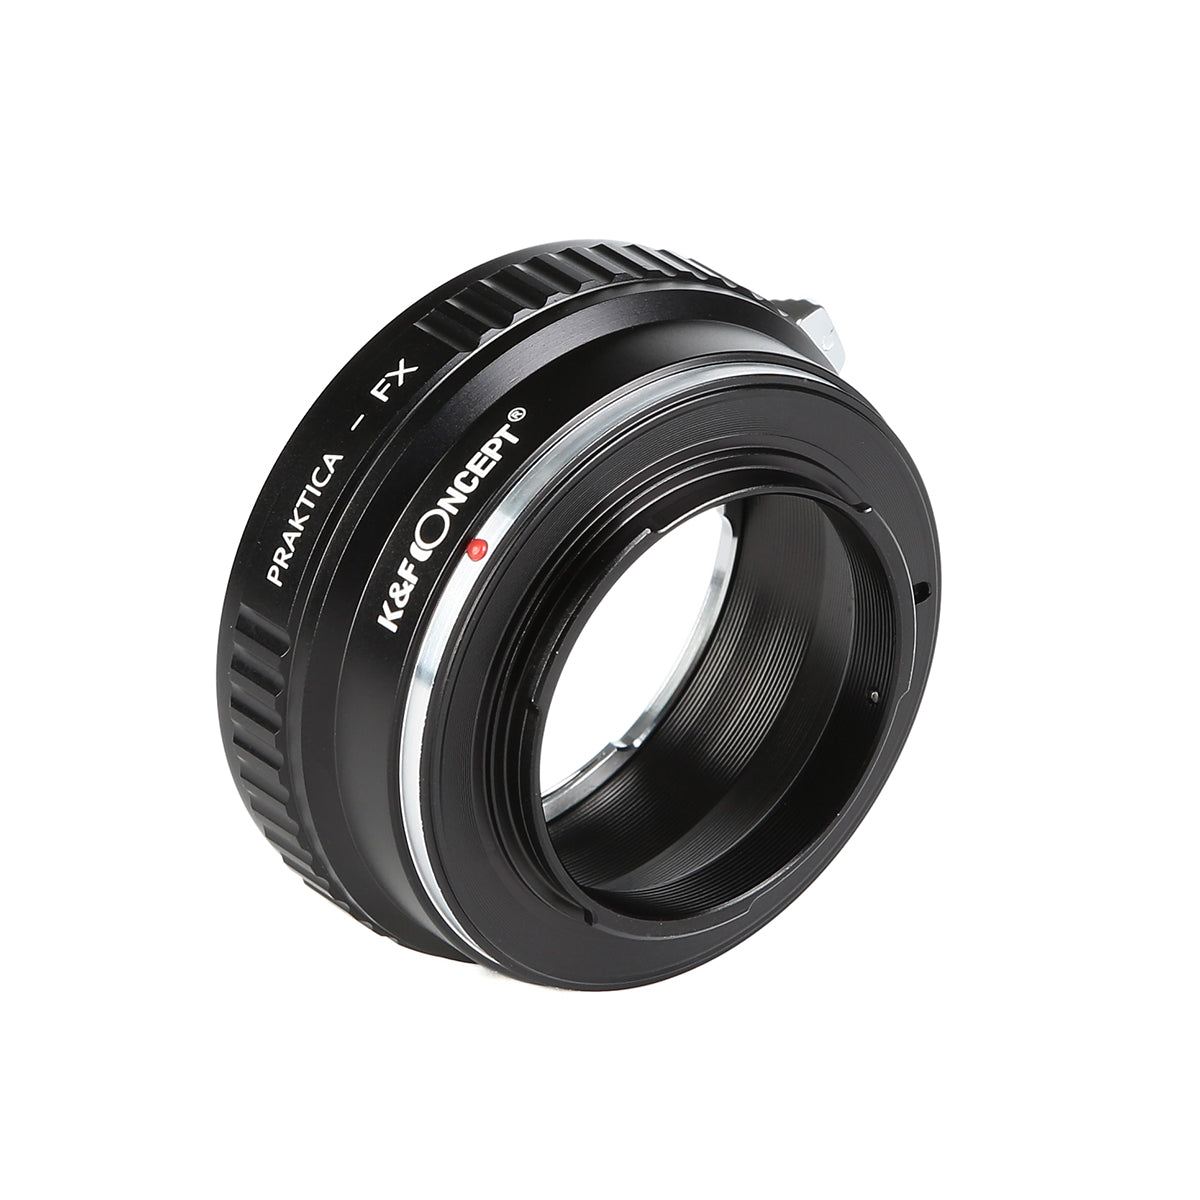 CLEARANCE SALE ! K&F CONCEPT Praktica PB-FX Fuji X Lens mount adapter